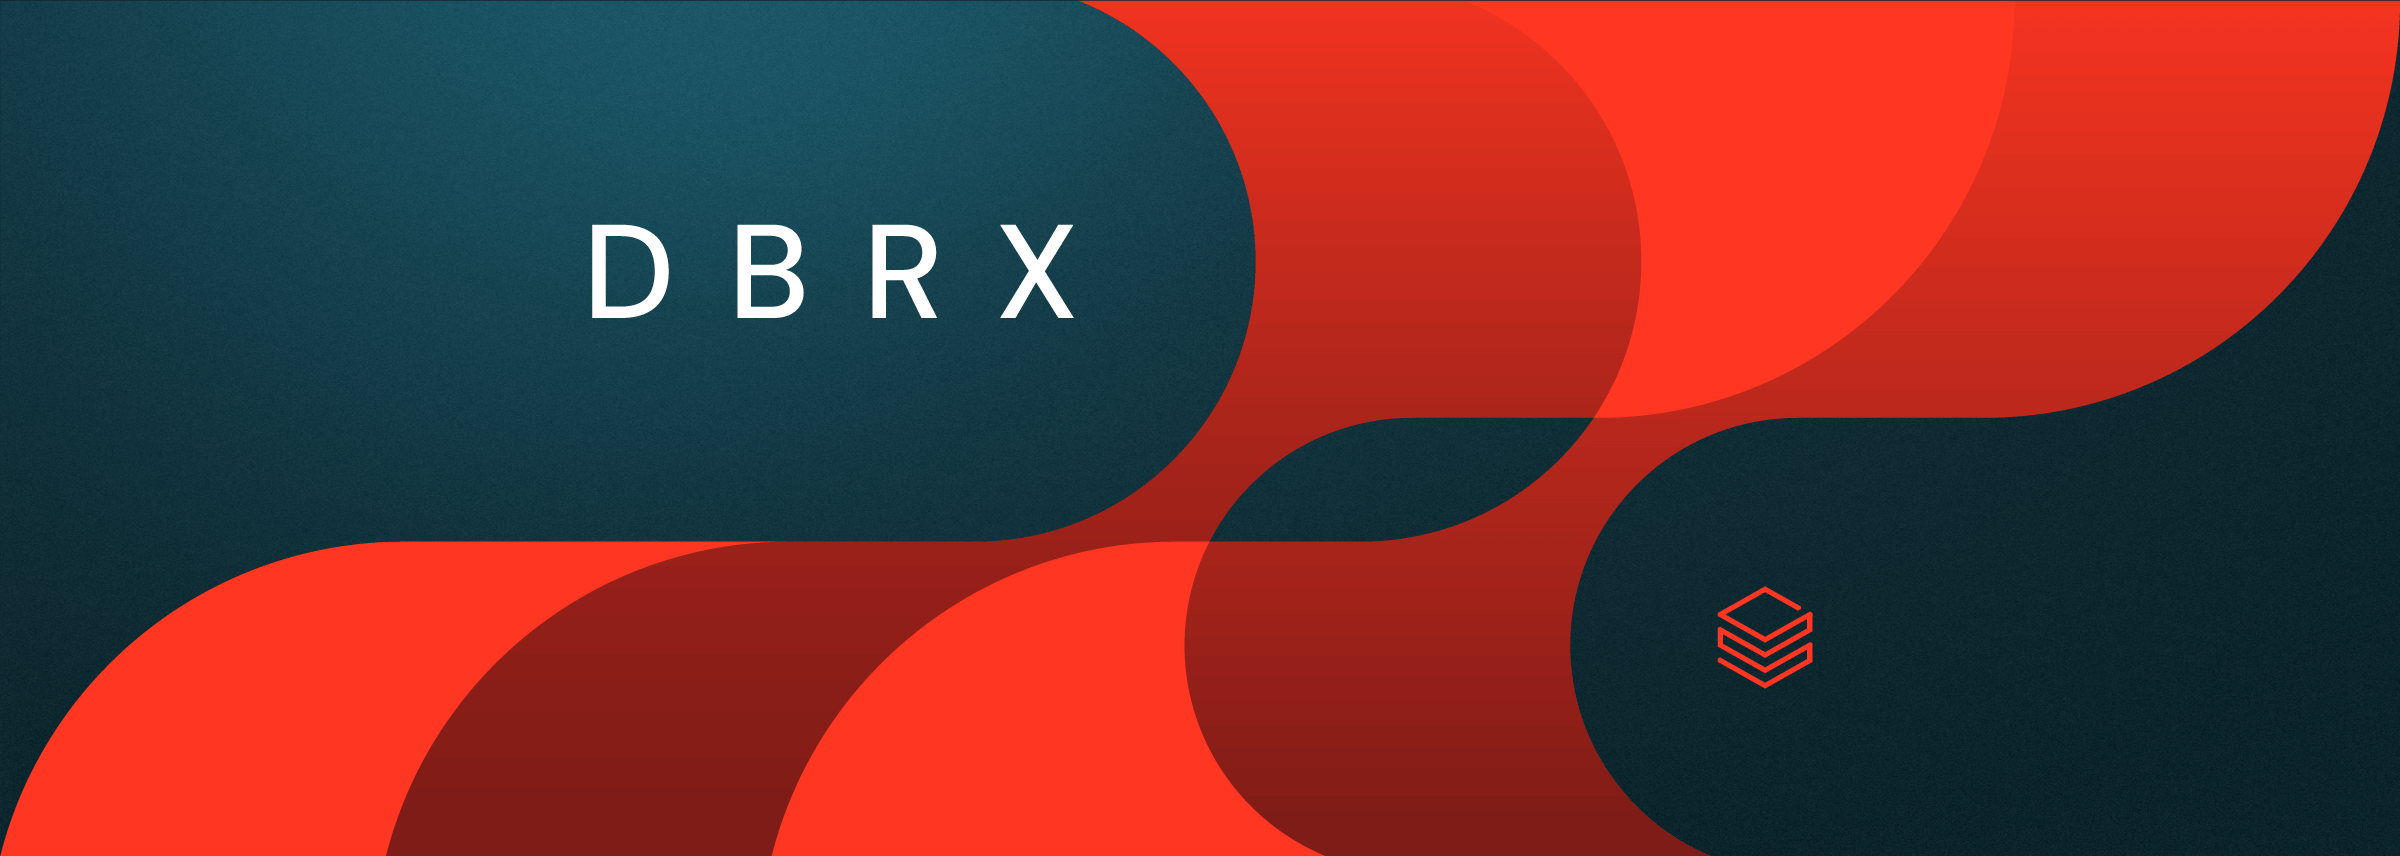 DBRX launch